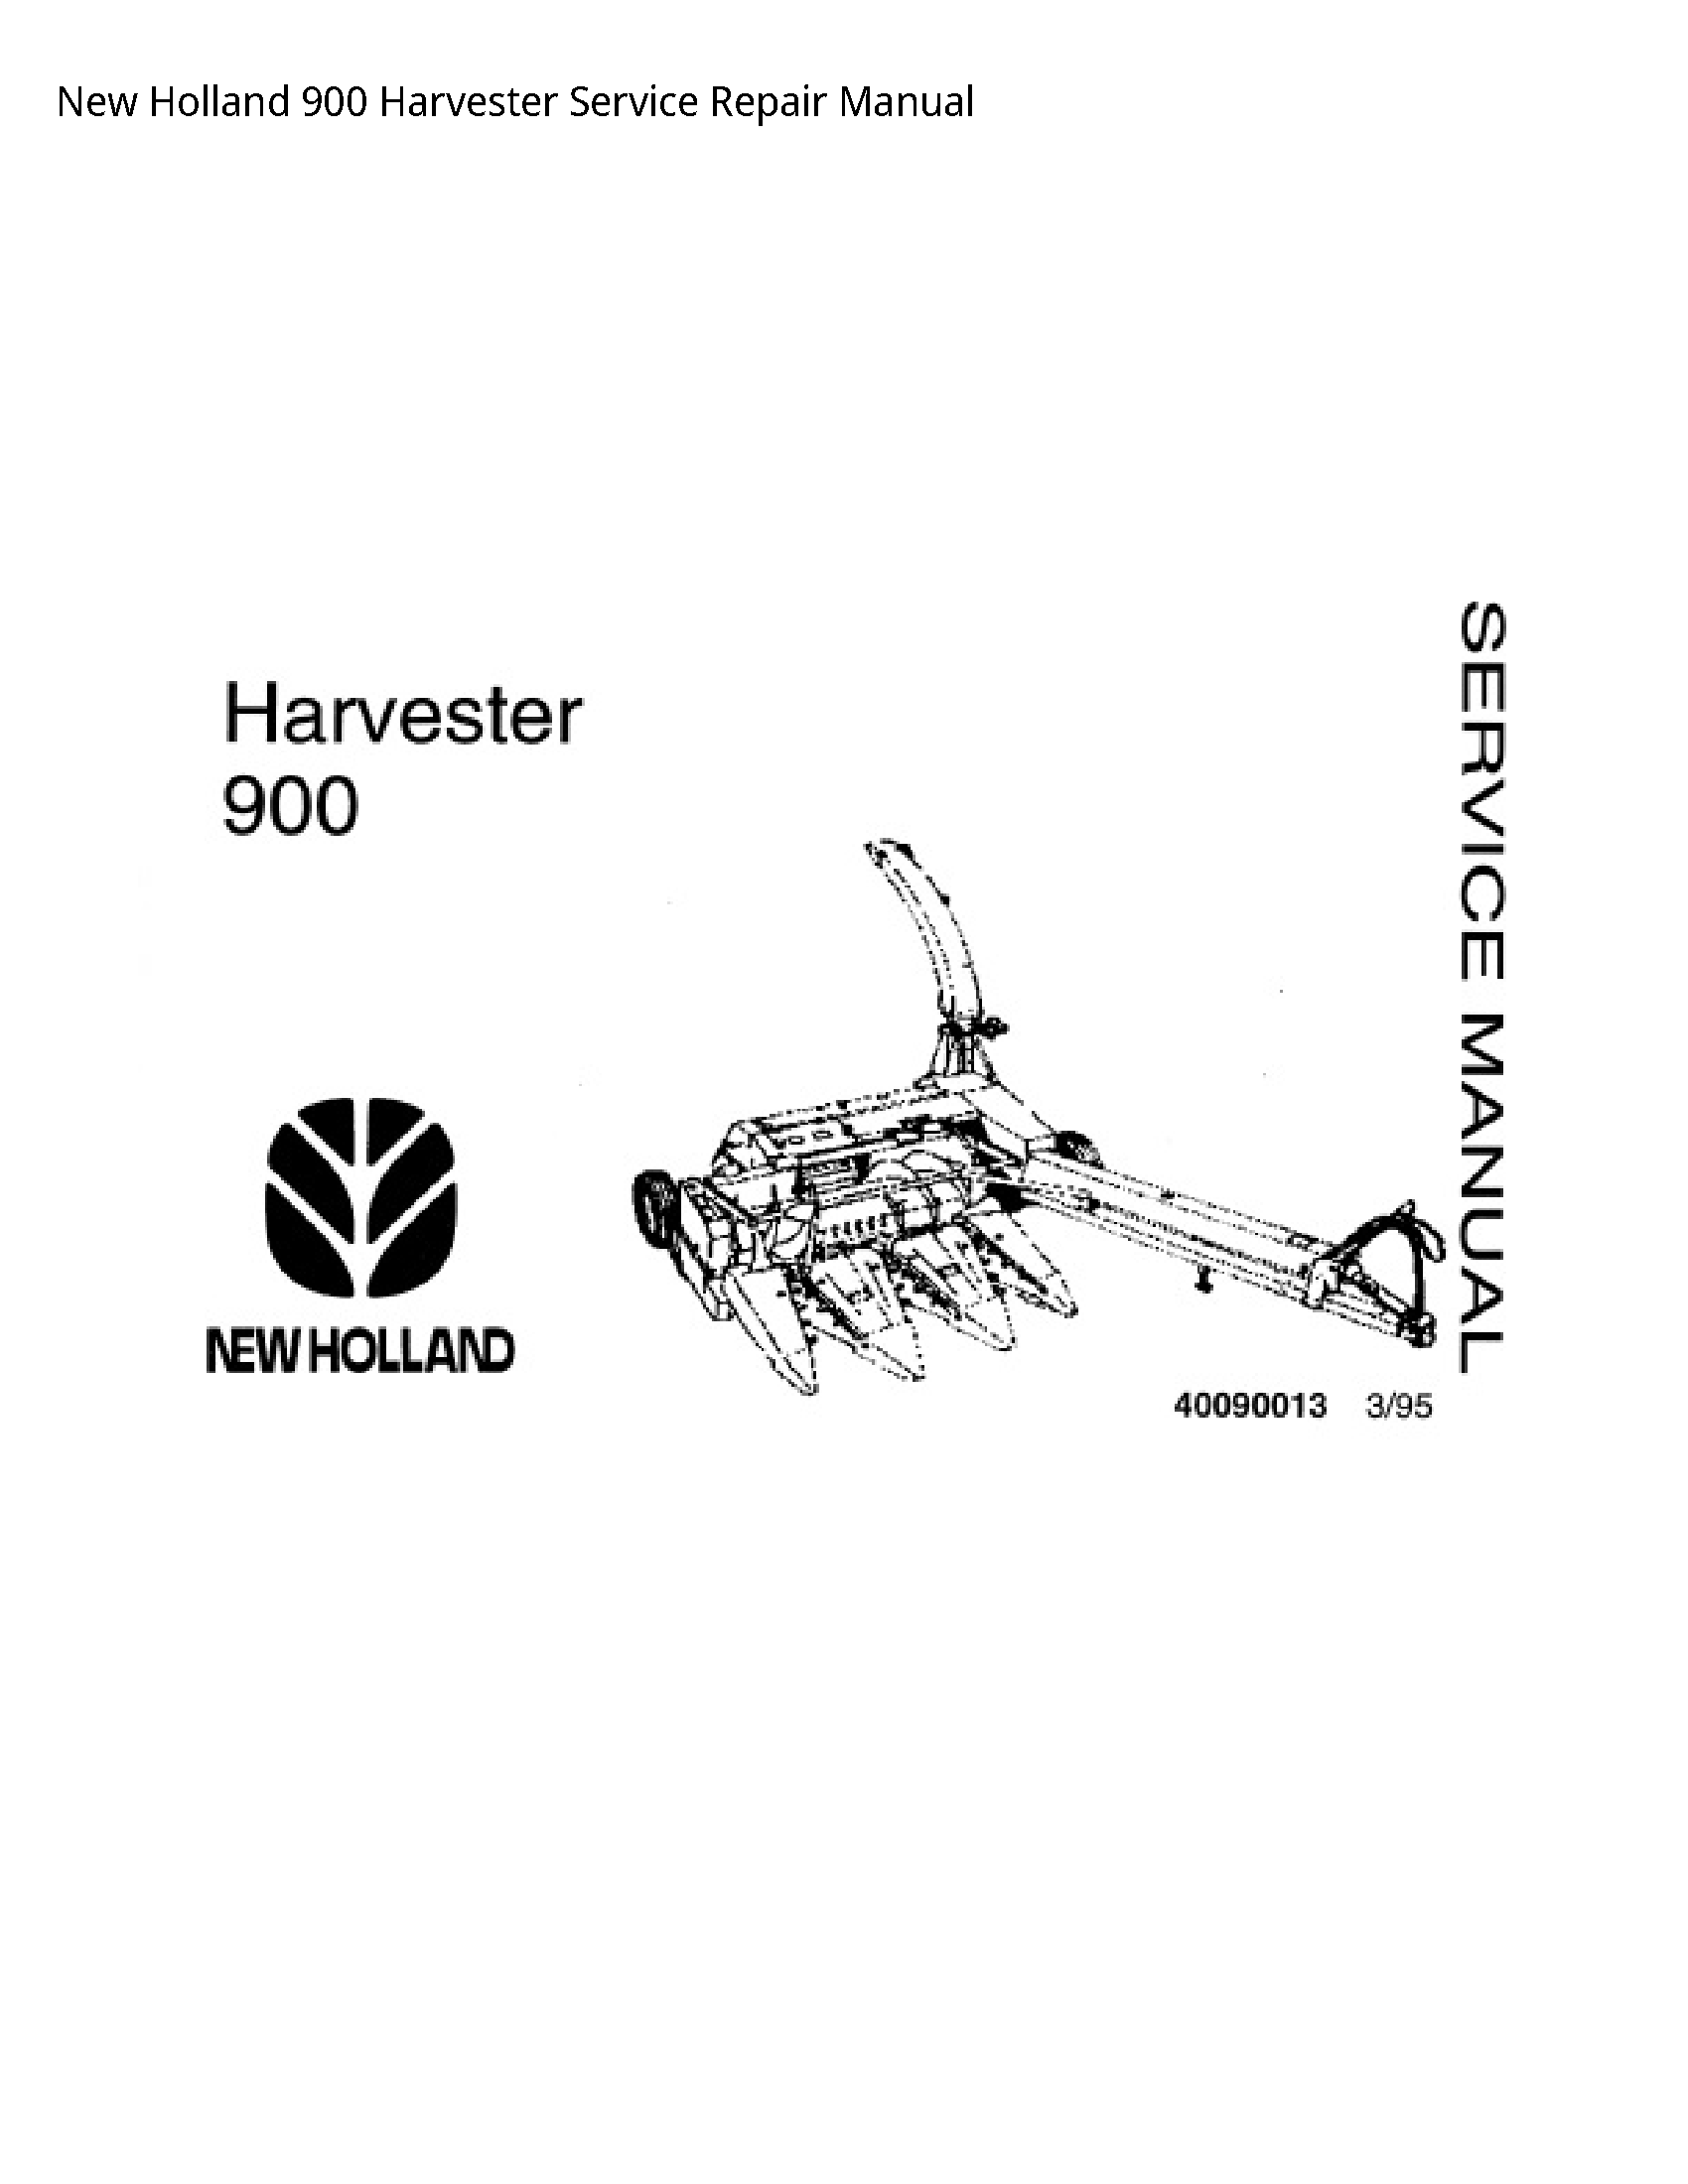 New Holland 900 Harvester manual